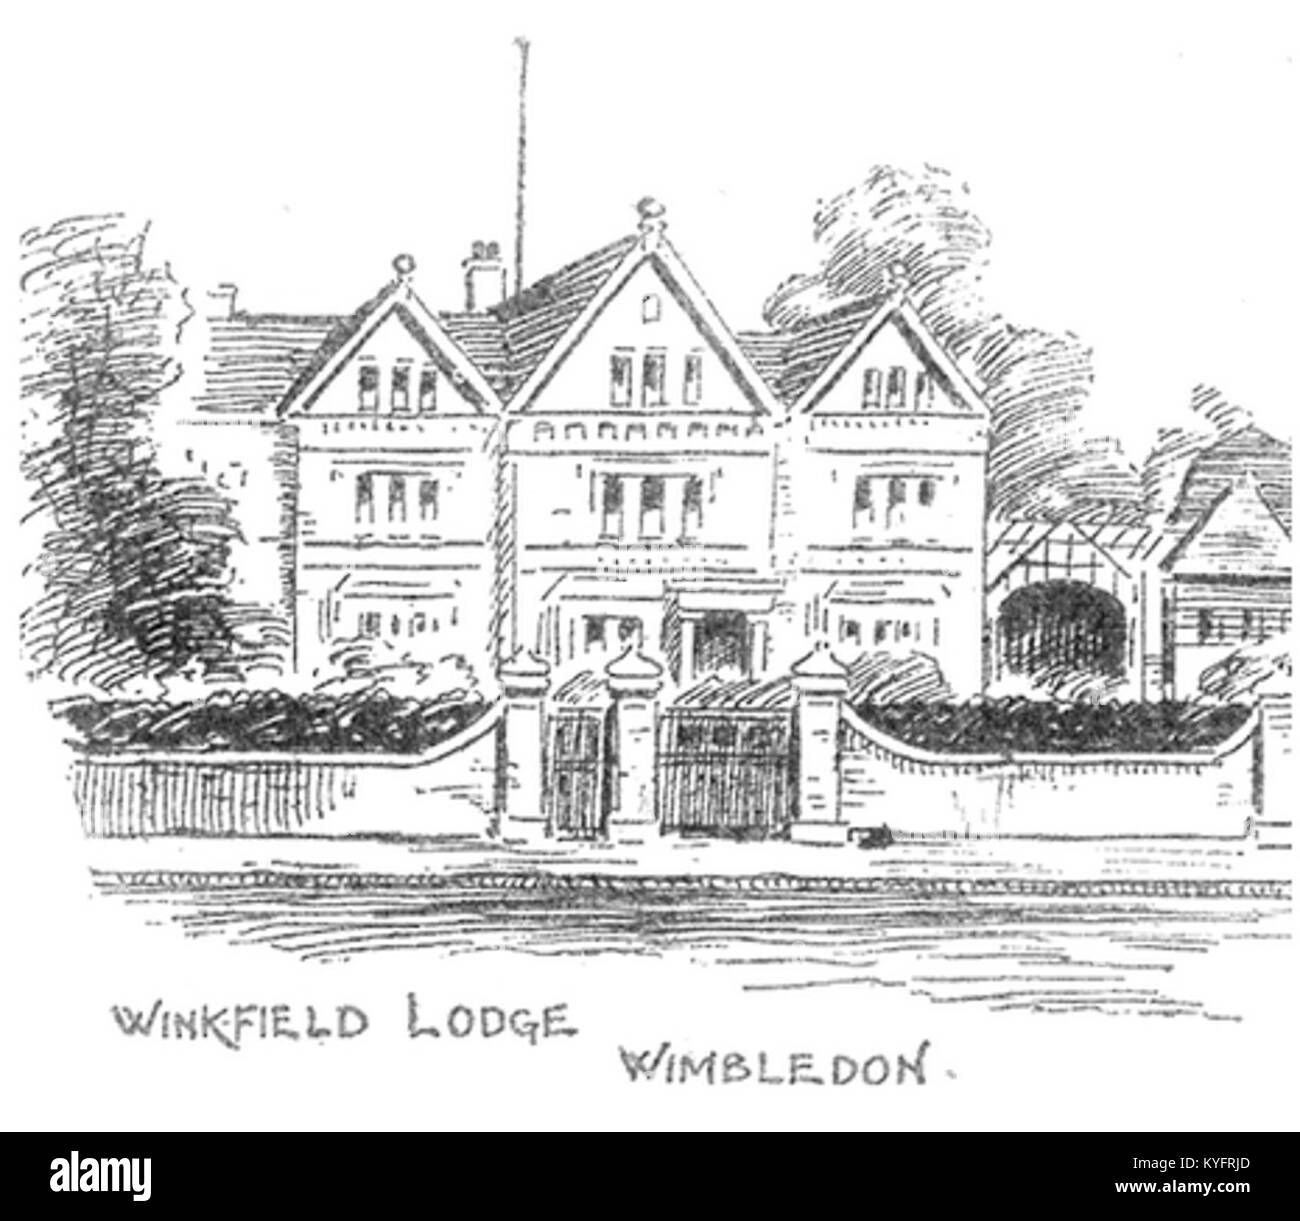 Winkfield Lodge, Wimbledon, c. 1917 Stock Photo